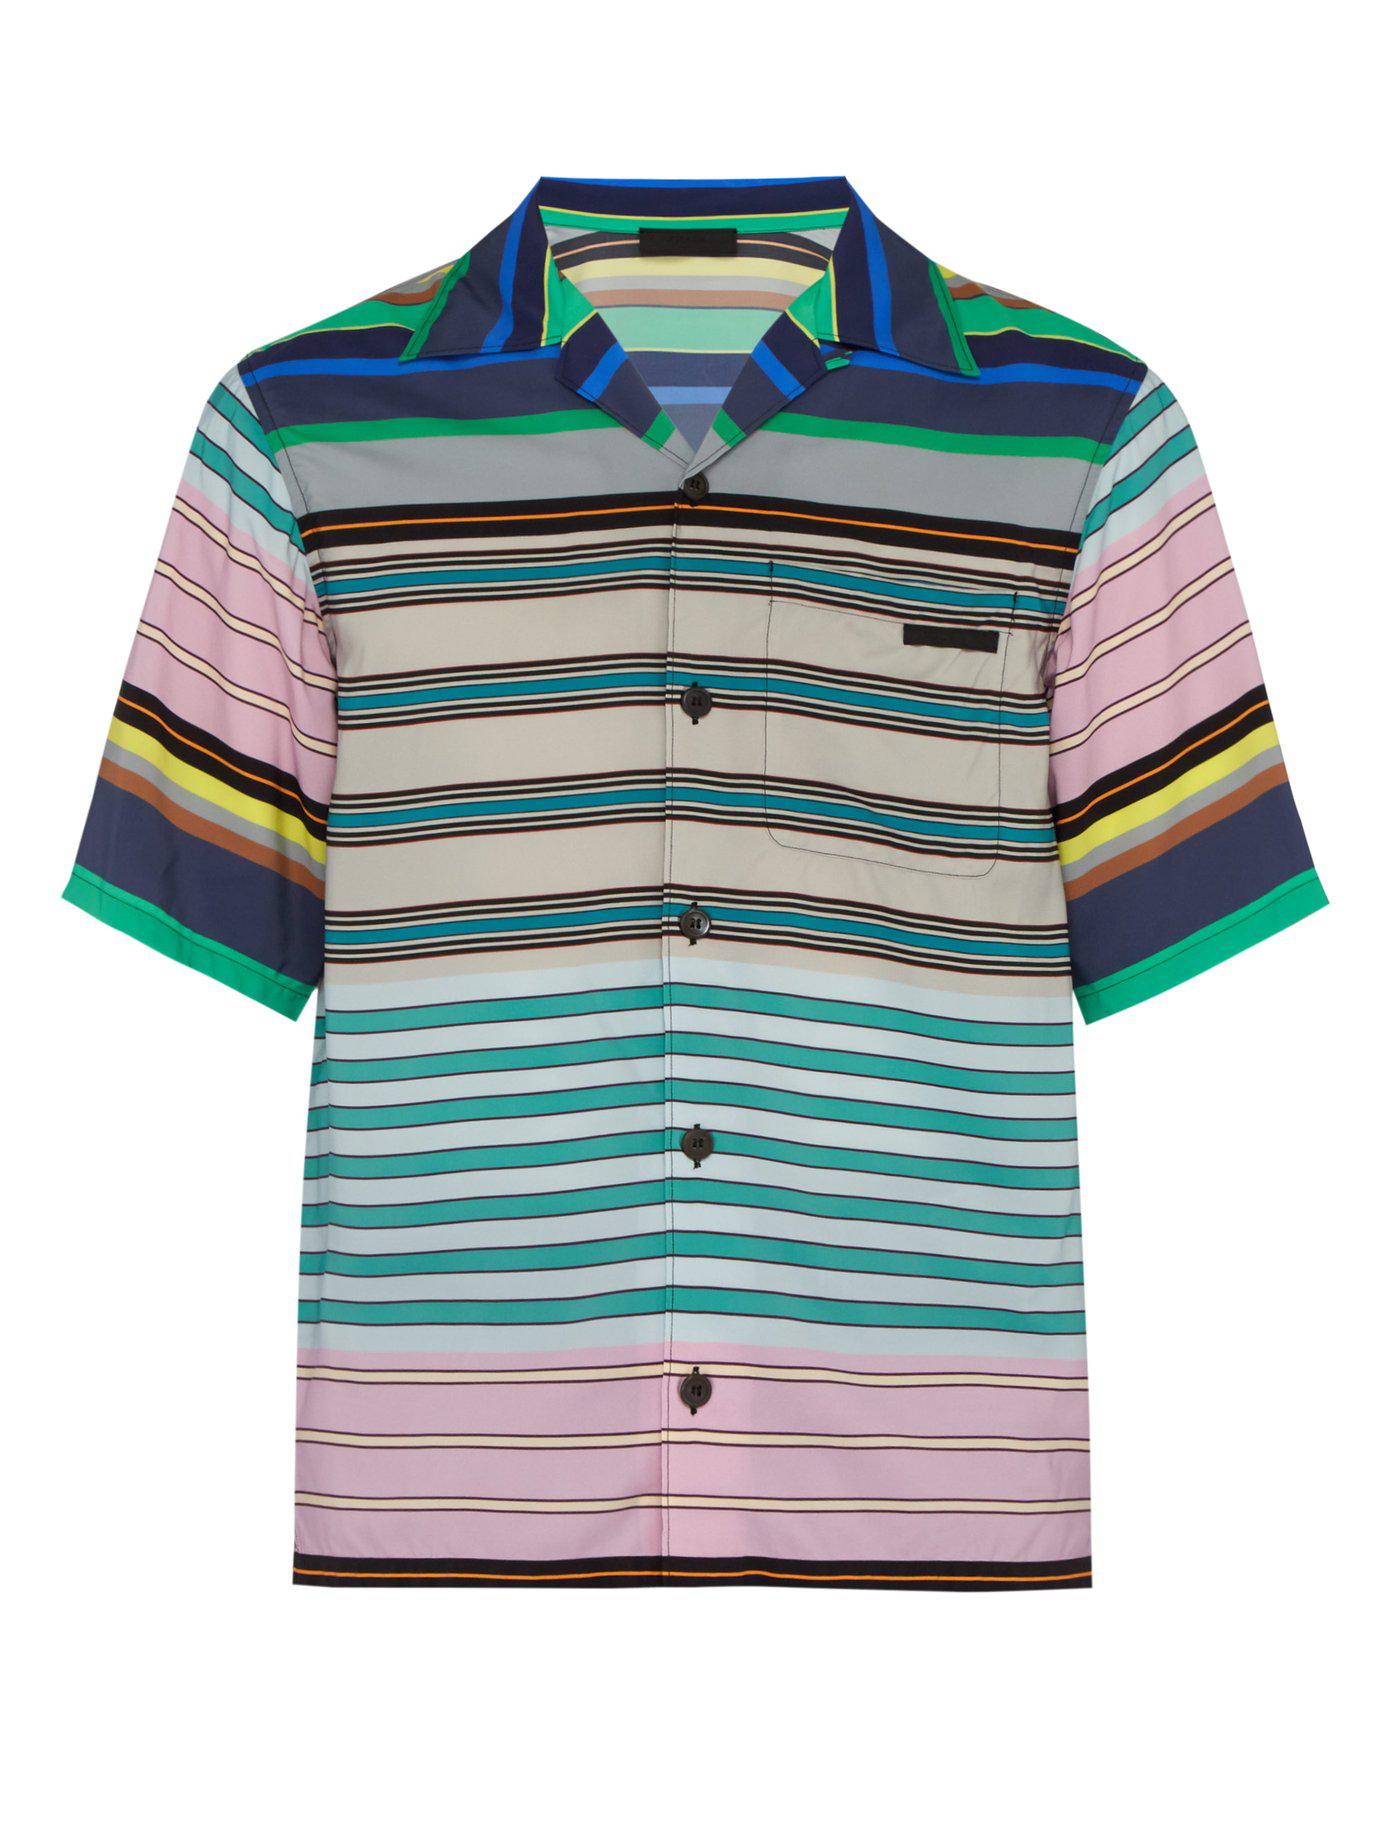 Prada Pongee Striped Bowling-shirt for Men - Lyst